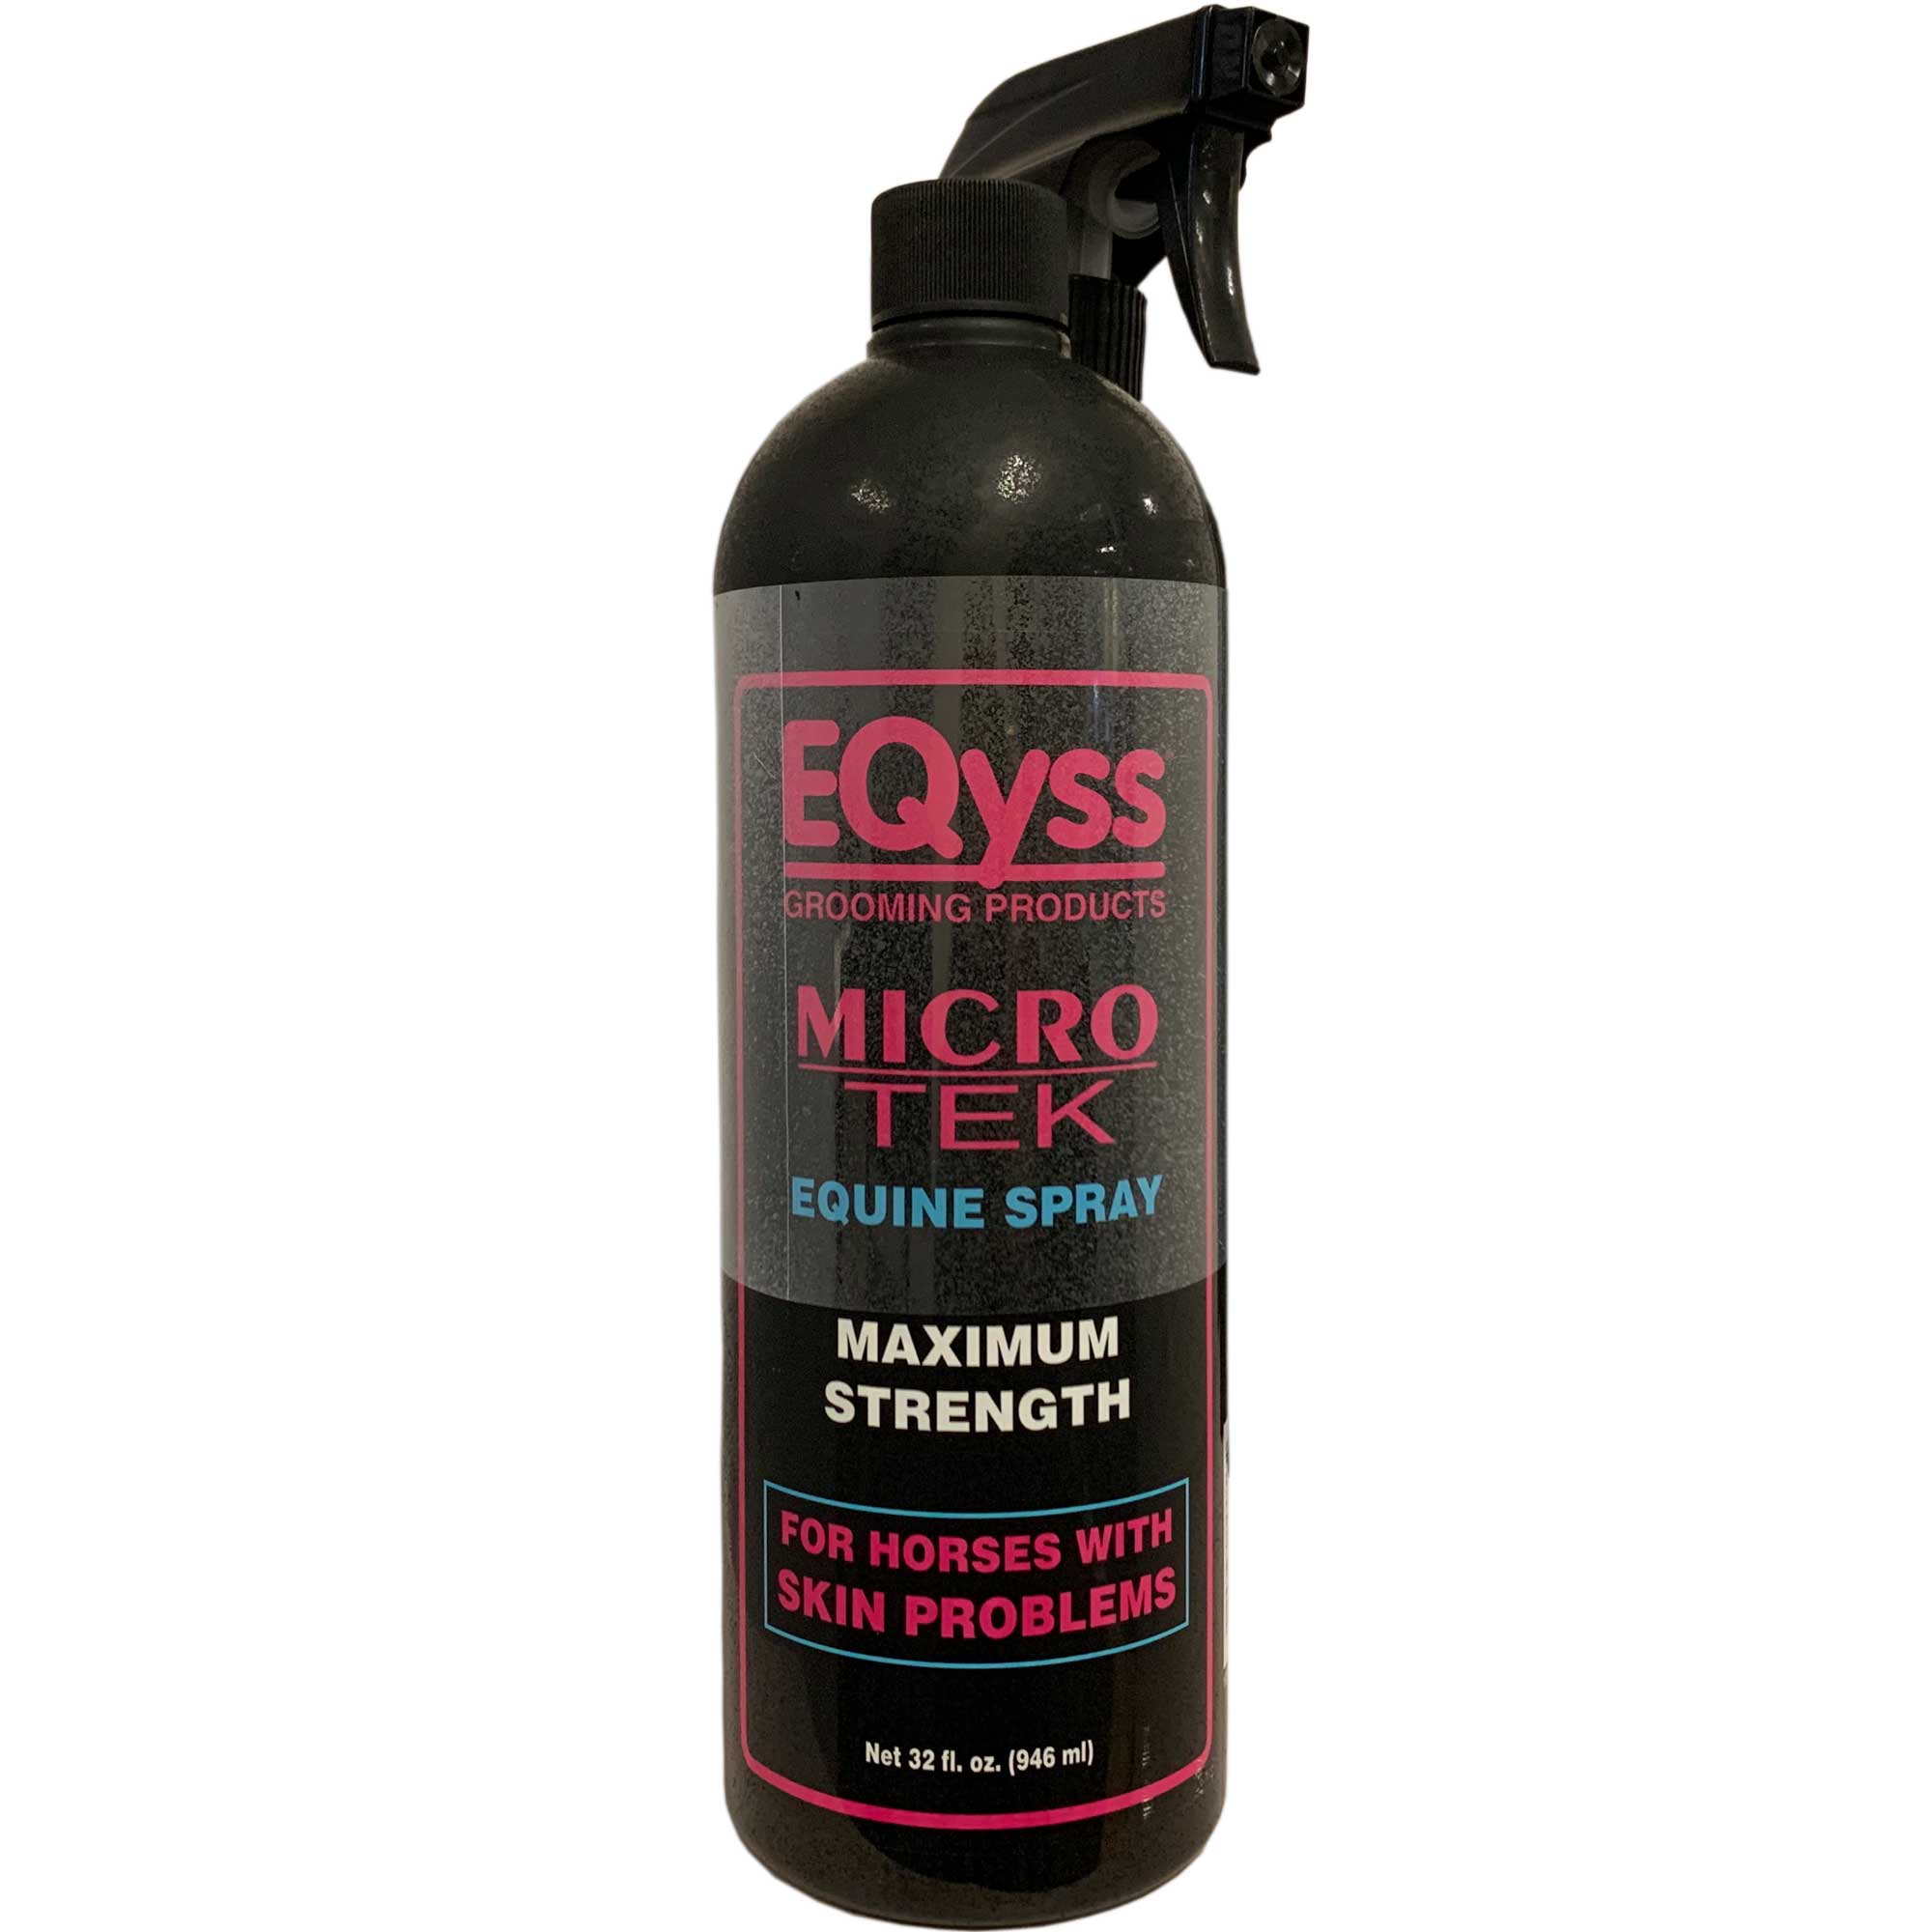 EQyss Micro-Tek Equine Spray Usage